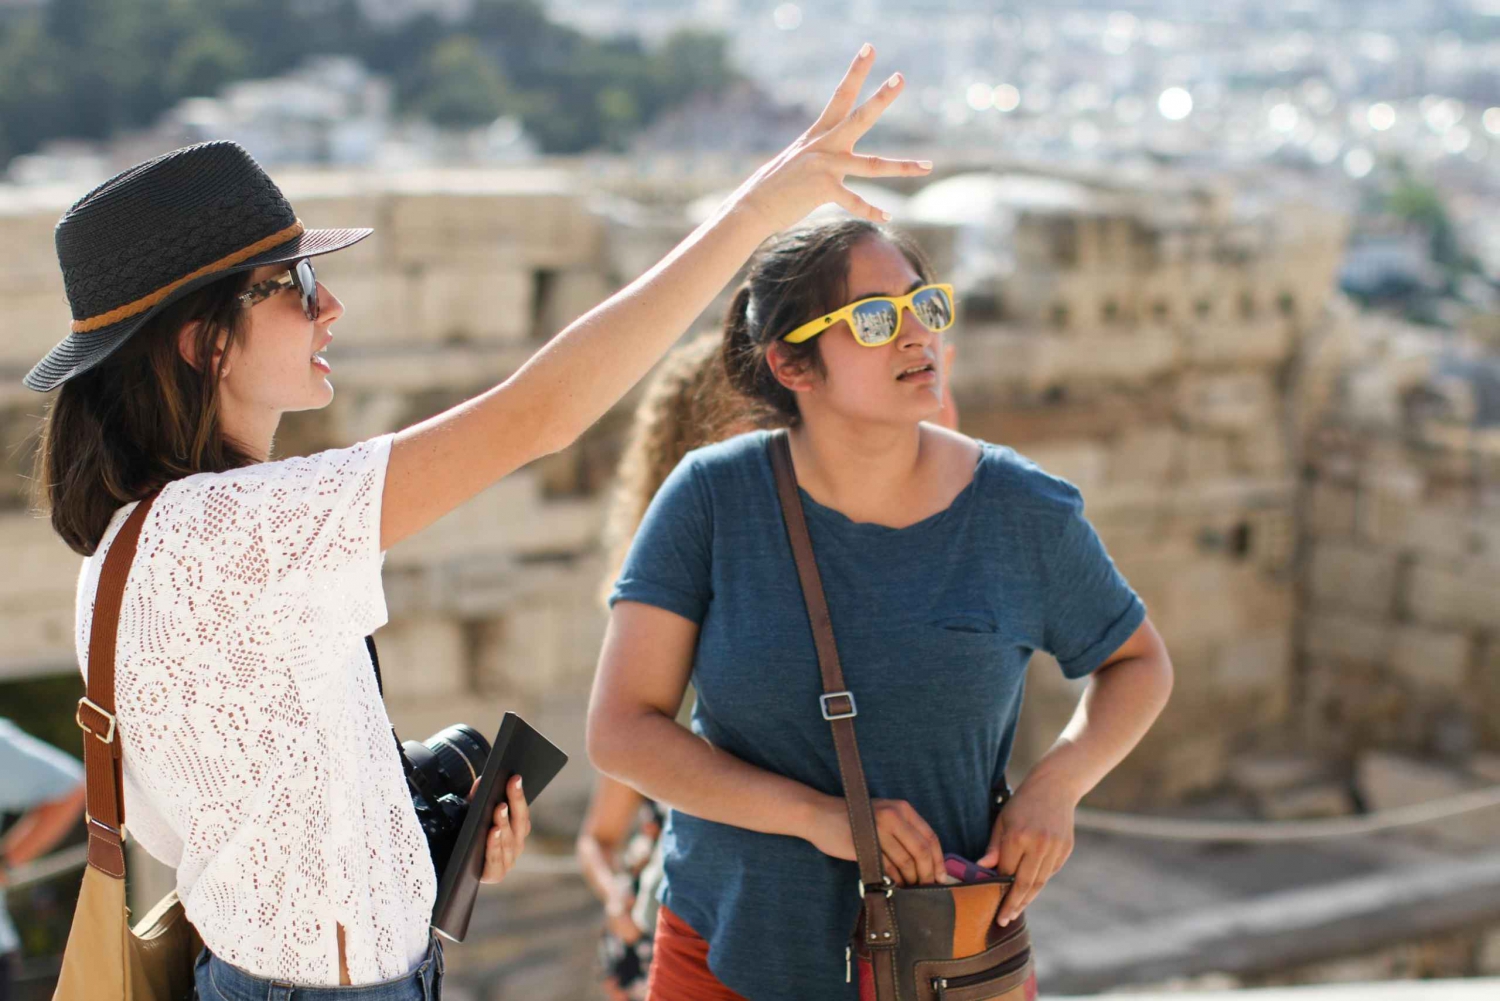 Rondleiding op de Akropolis in kleine groep met entreekaartjes